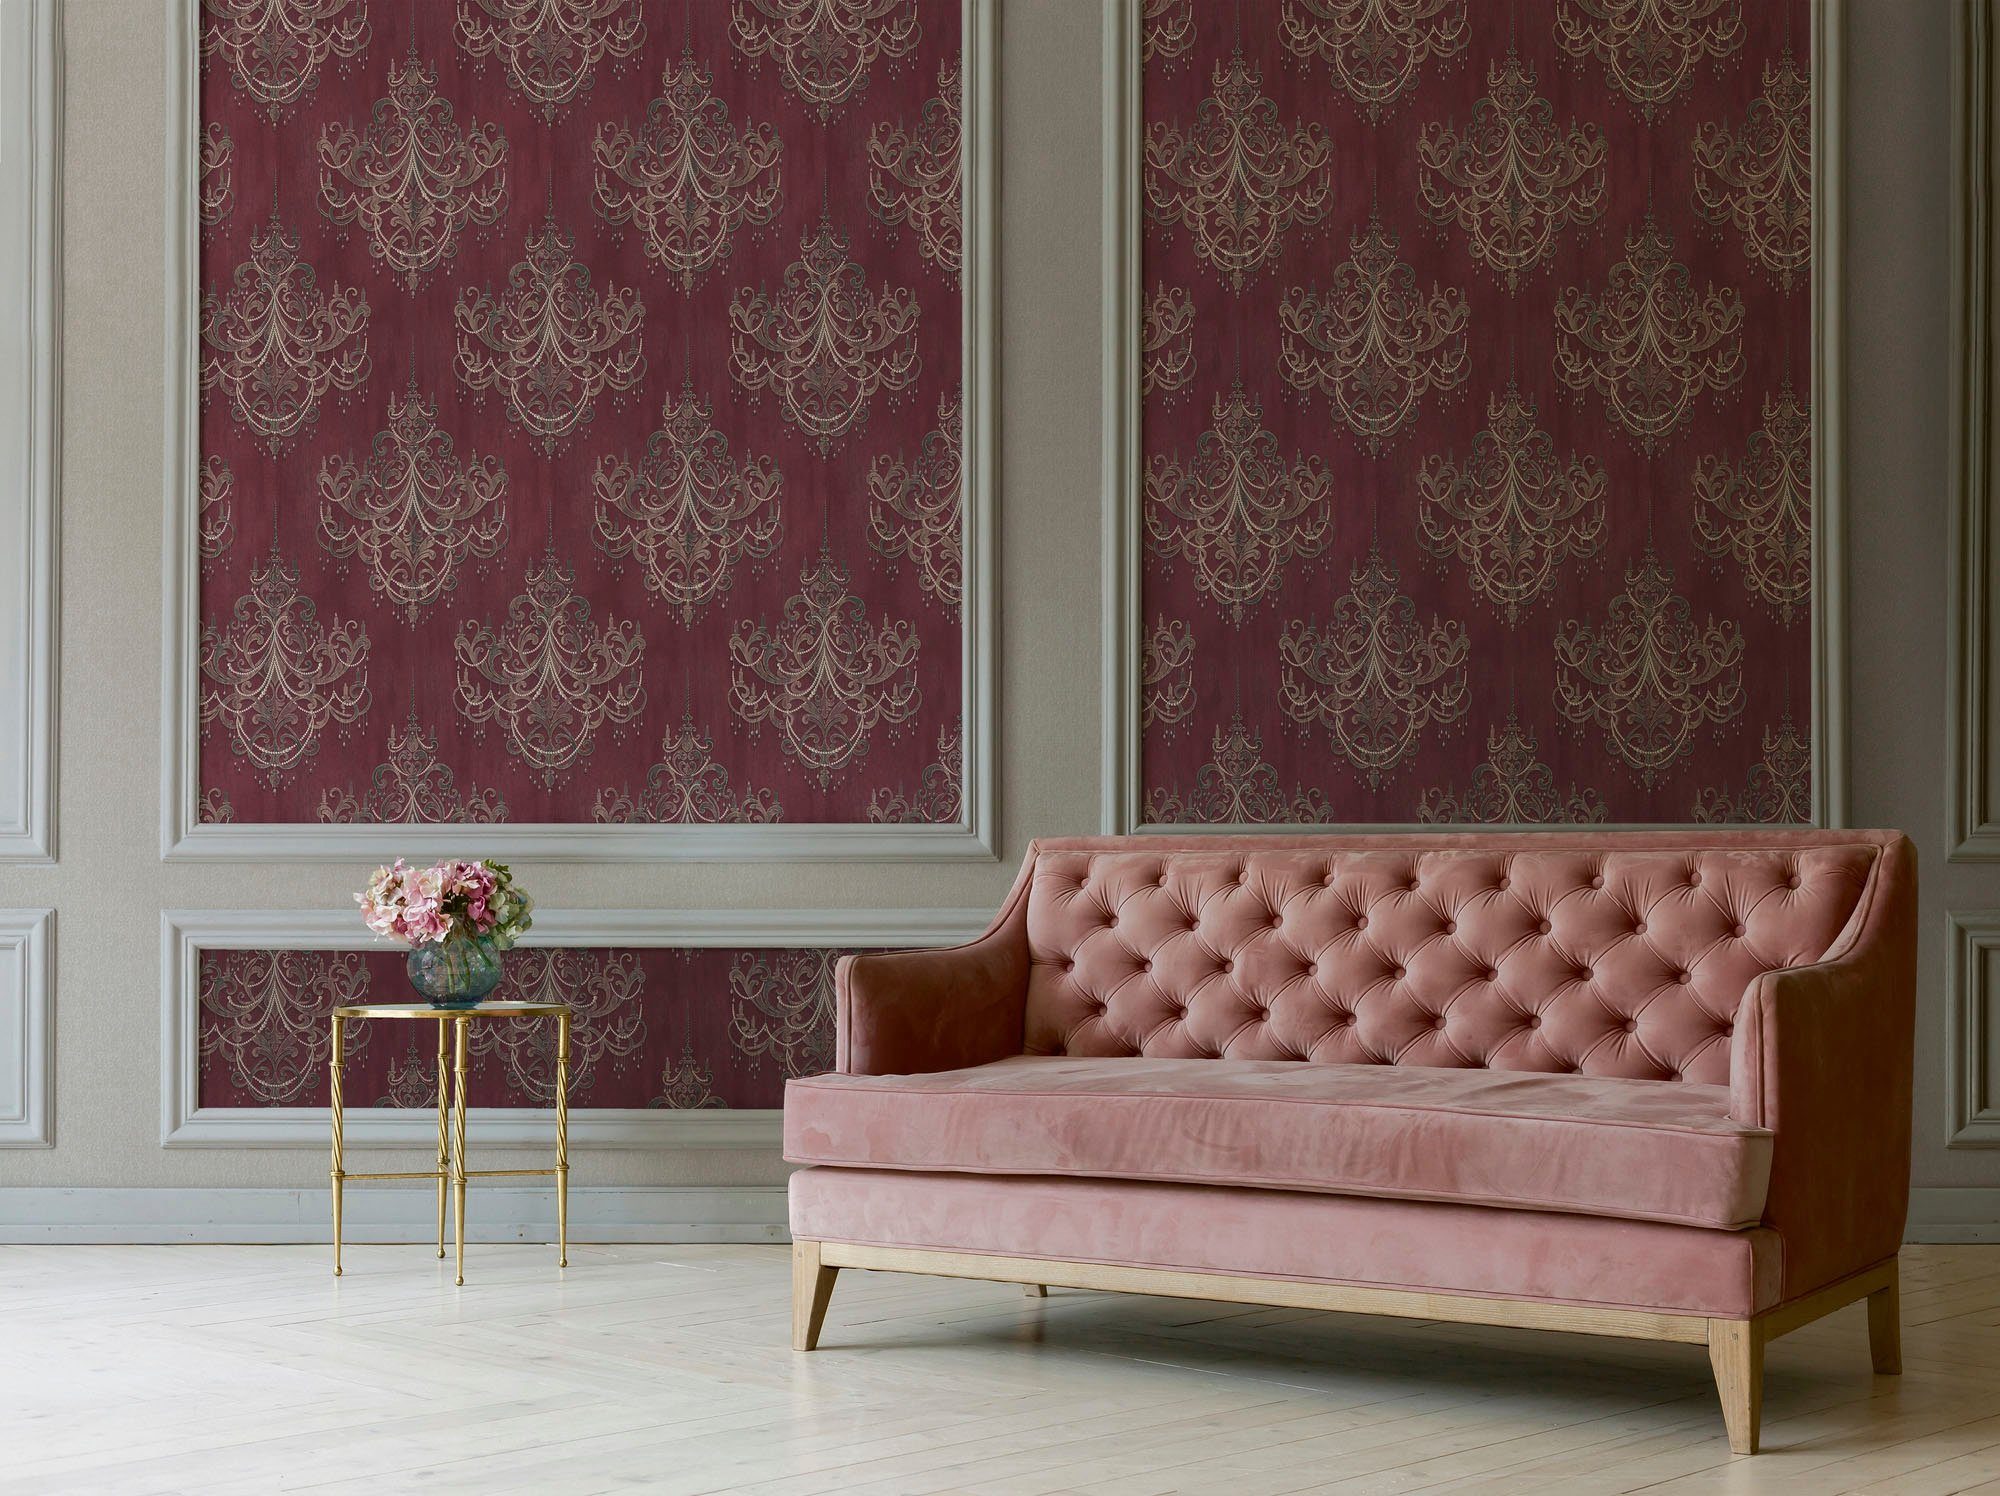 walls Mata Hari, dunkelrot/rosa Barock strukturiert, Tapete ornamental, living Vliestapete Barock, Ornament gemustert,